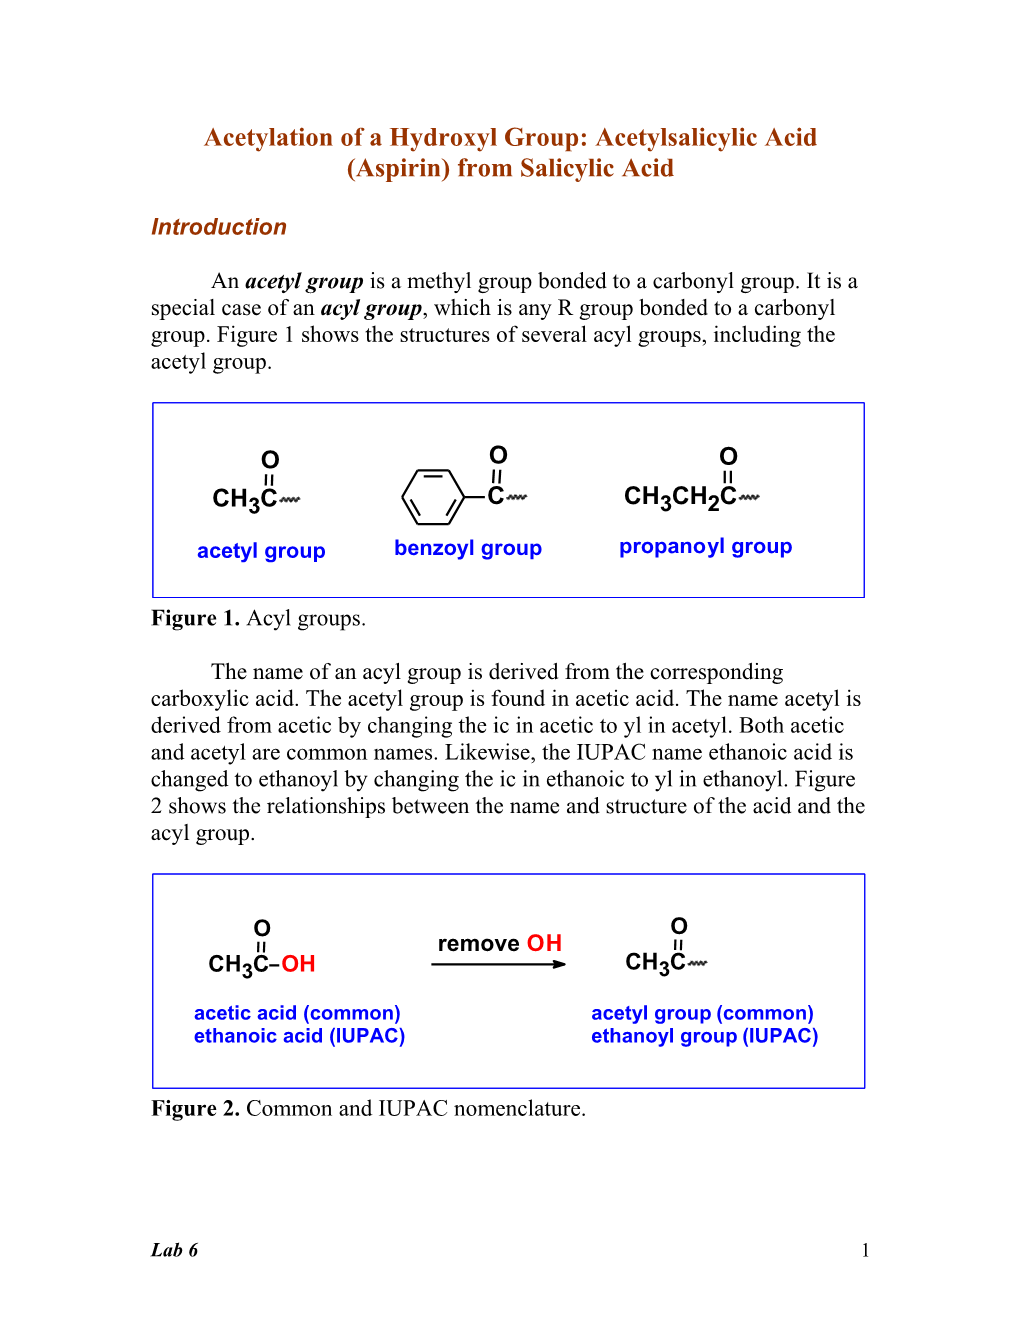 Acetylation of a Hydroxyl Group: Acetylsalicylic Acid (Aspirin) from Salicylic Acid